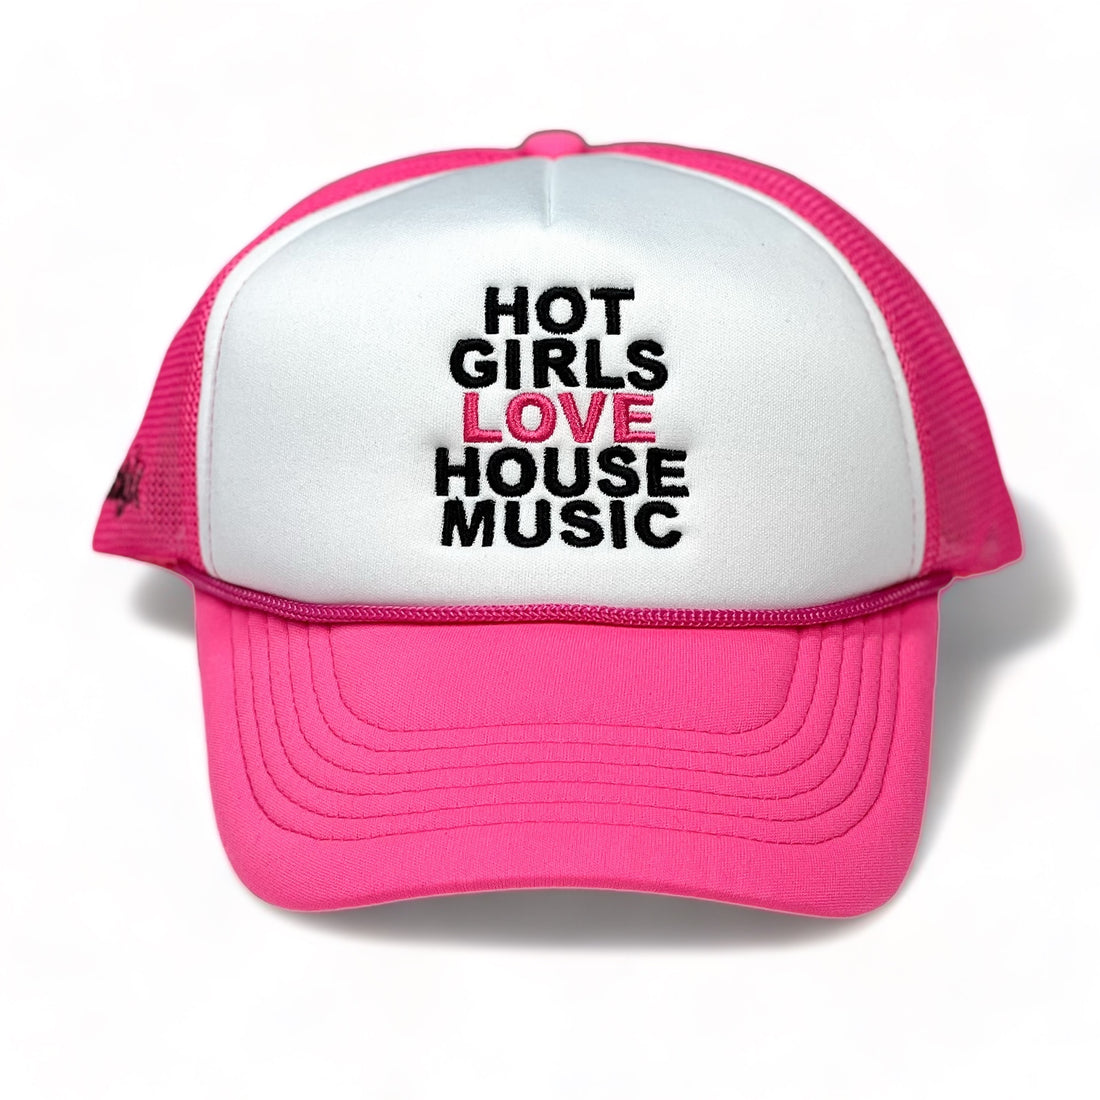 Nostalgix - Hot Girls Love House Music - Hot Pink Trucker Hat